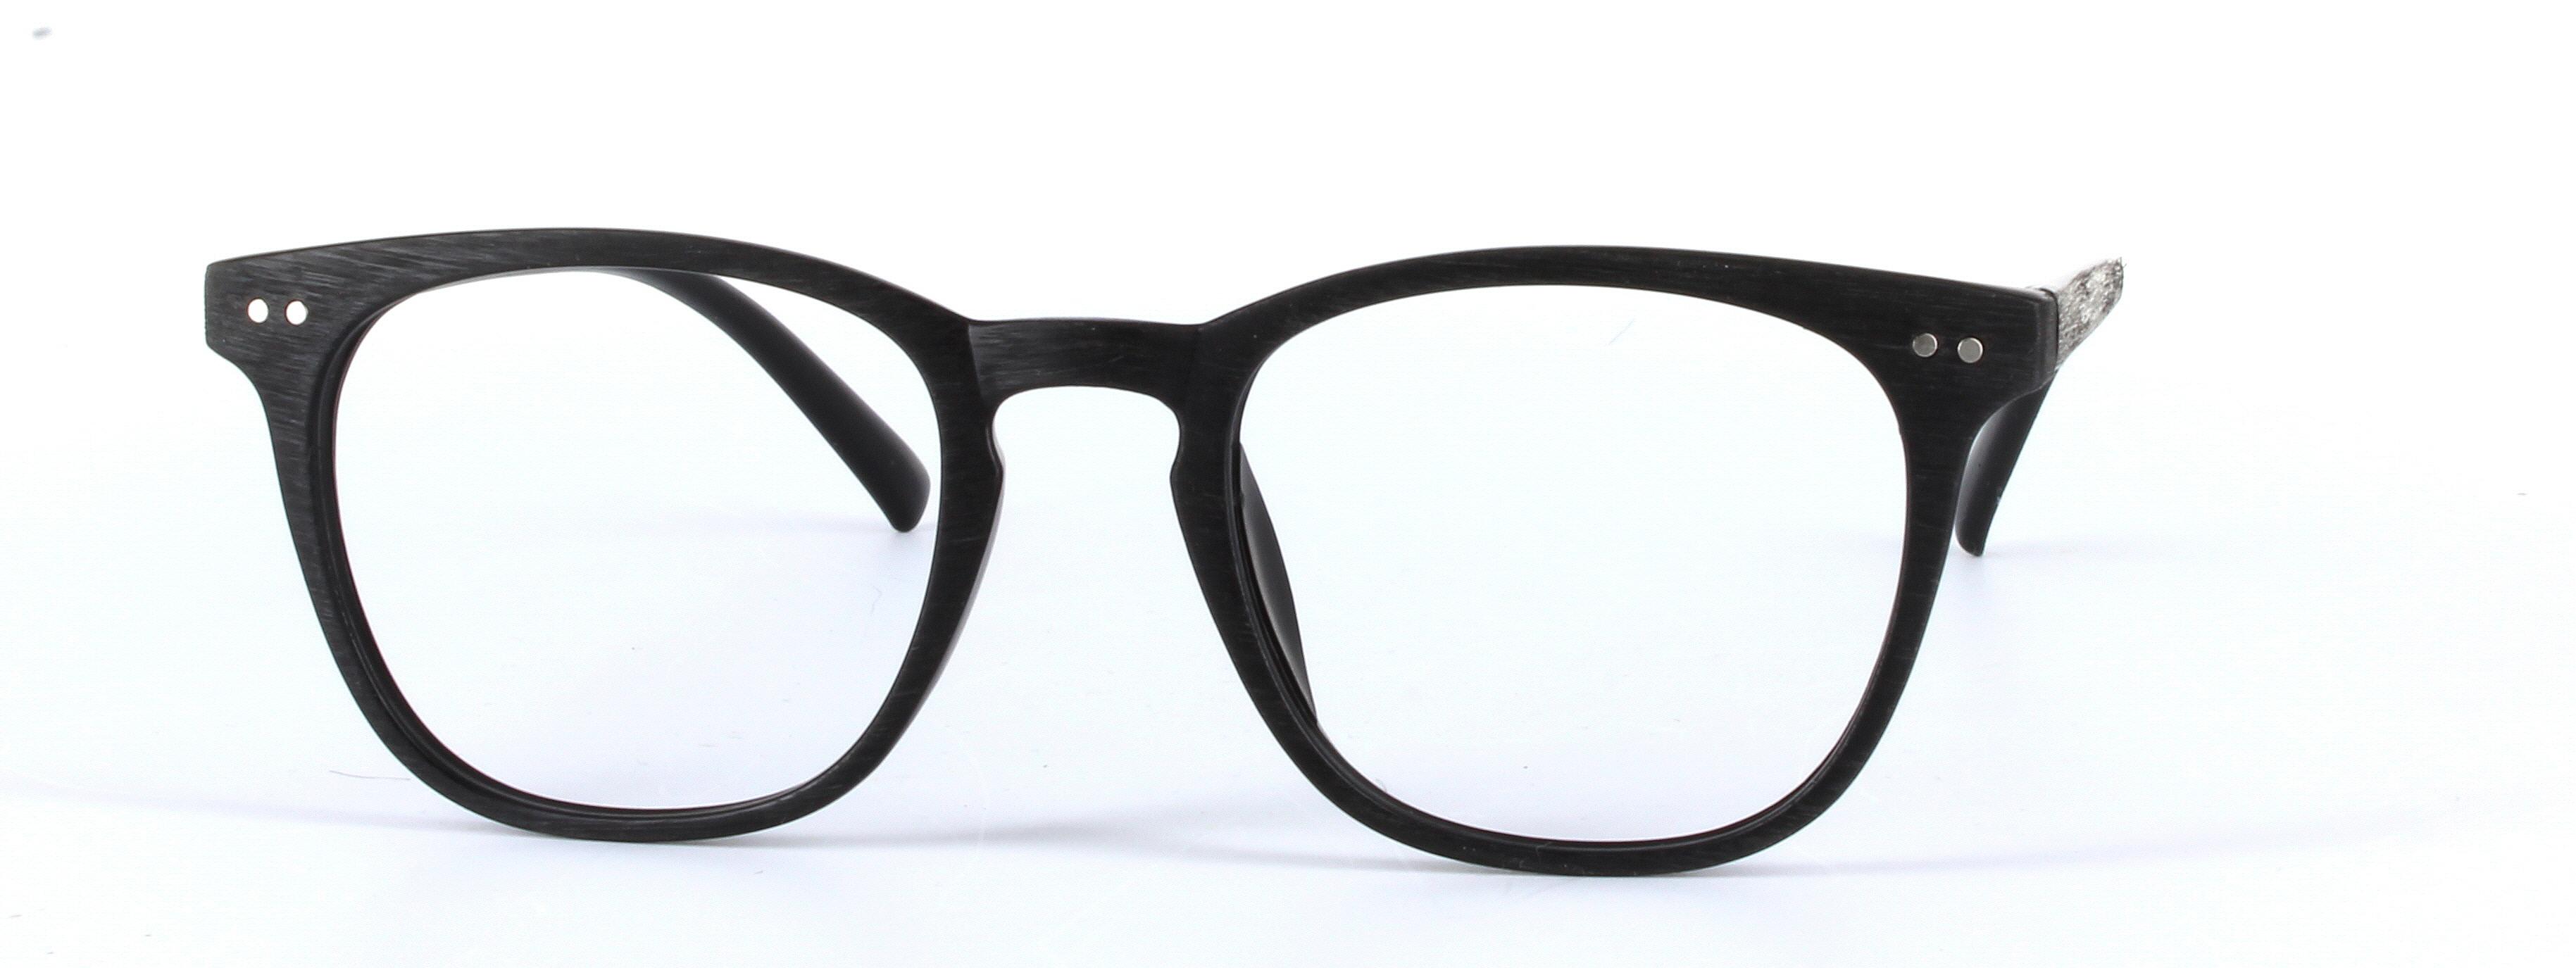 Aubrey Black Full Rim Oval Round Plastic Glasses - Image View 5